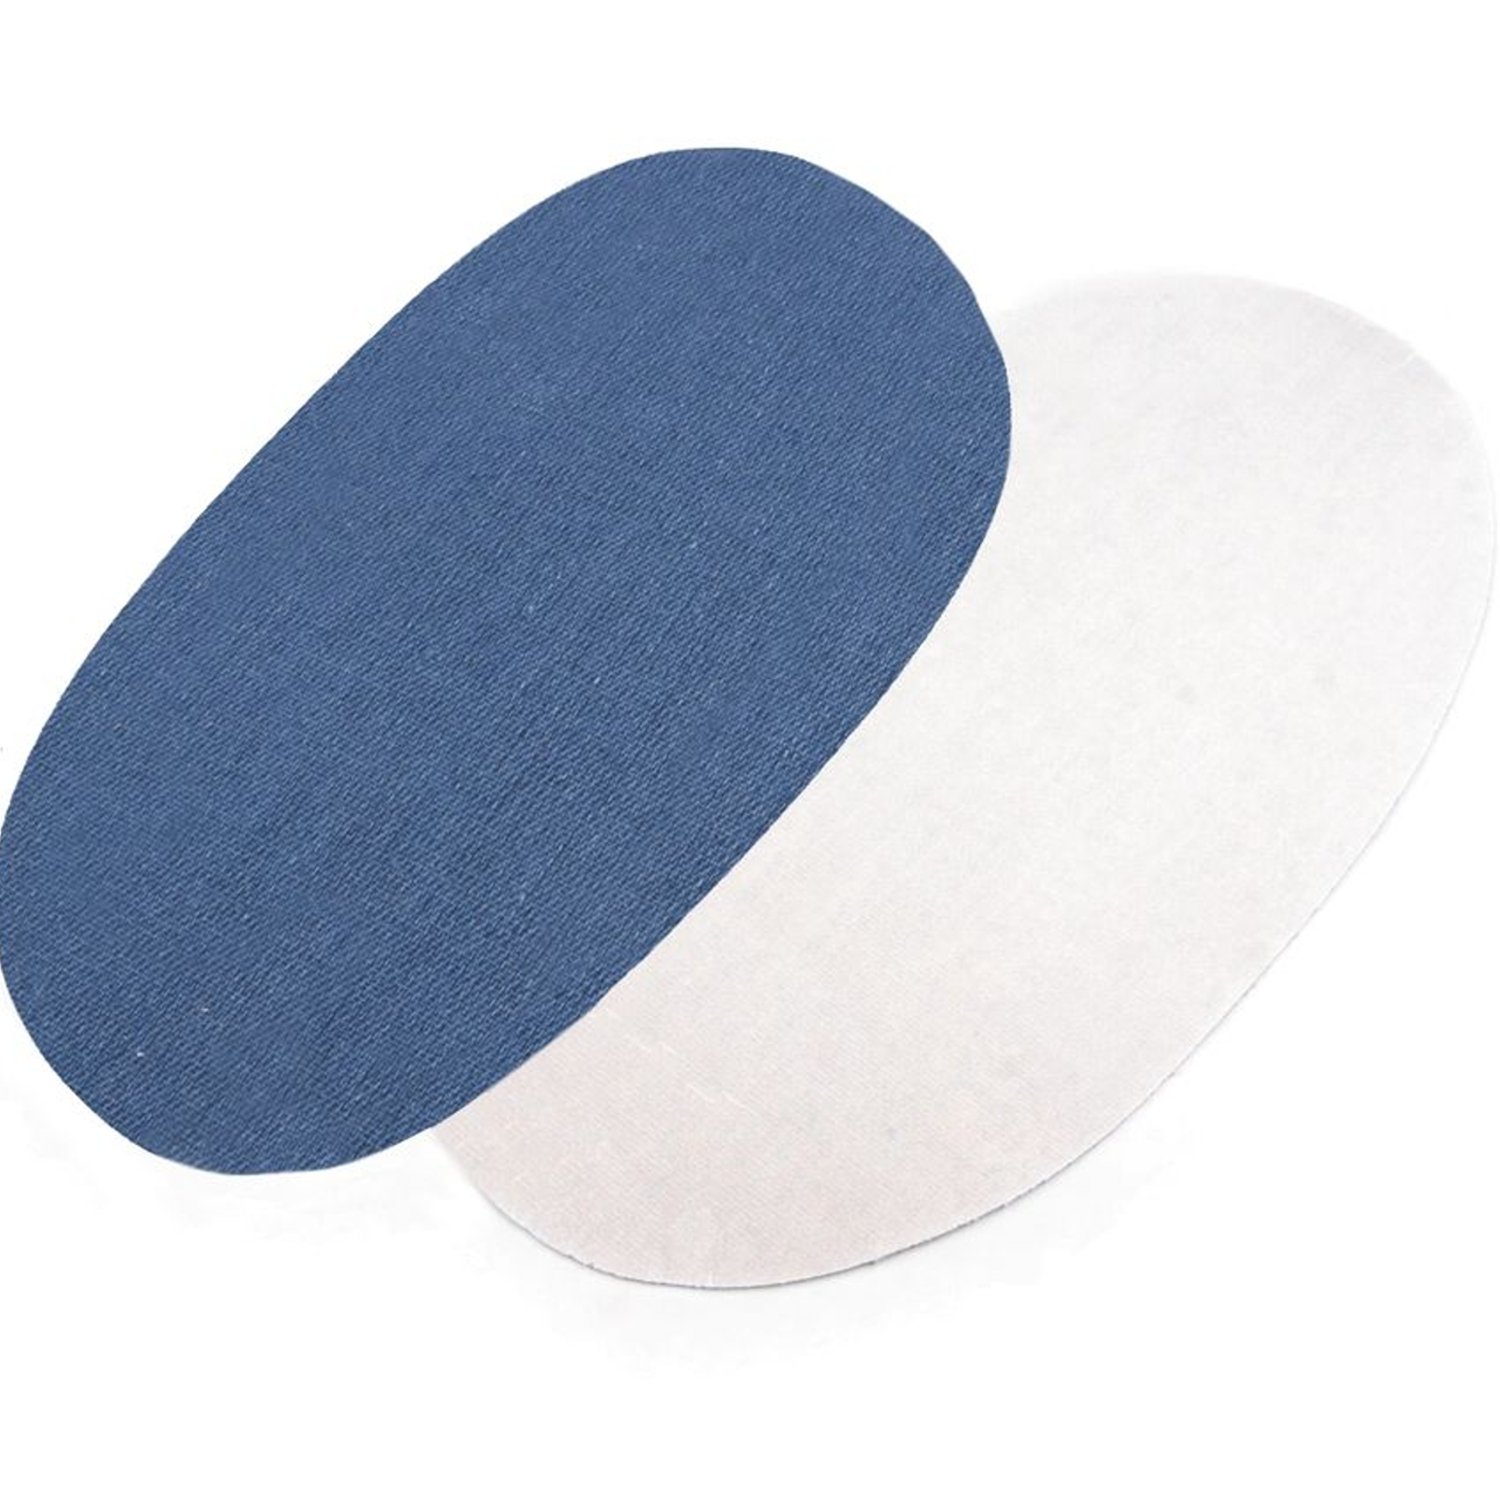 2 Bügelflicken oval - 9cm x 18cm - Hellblau (1)